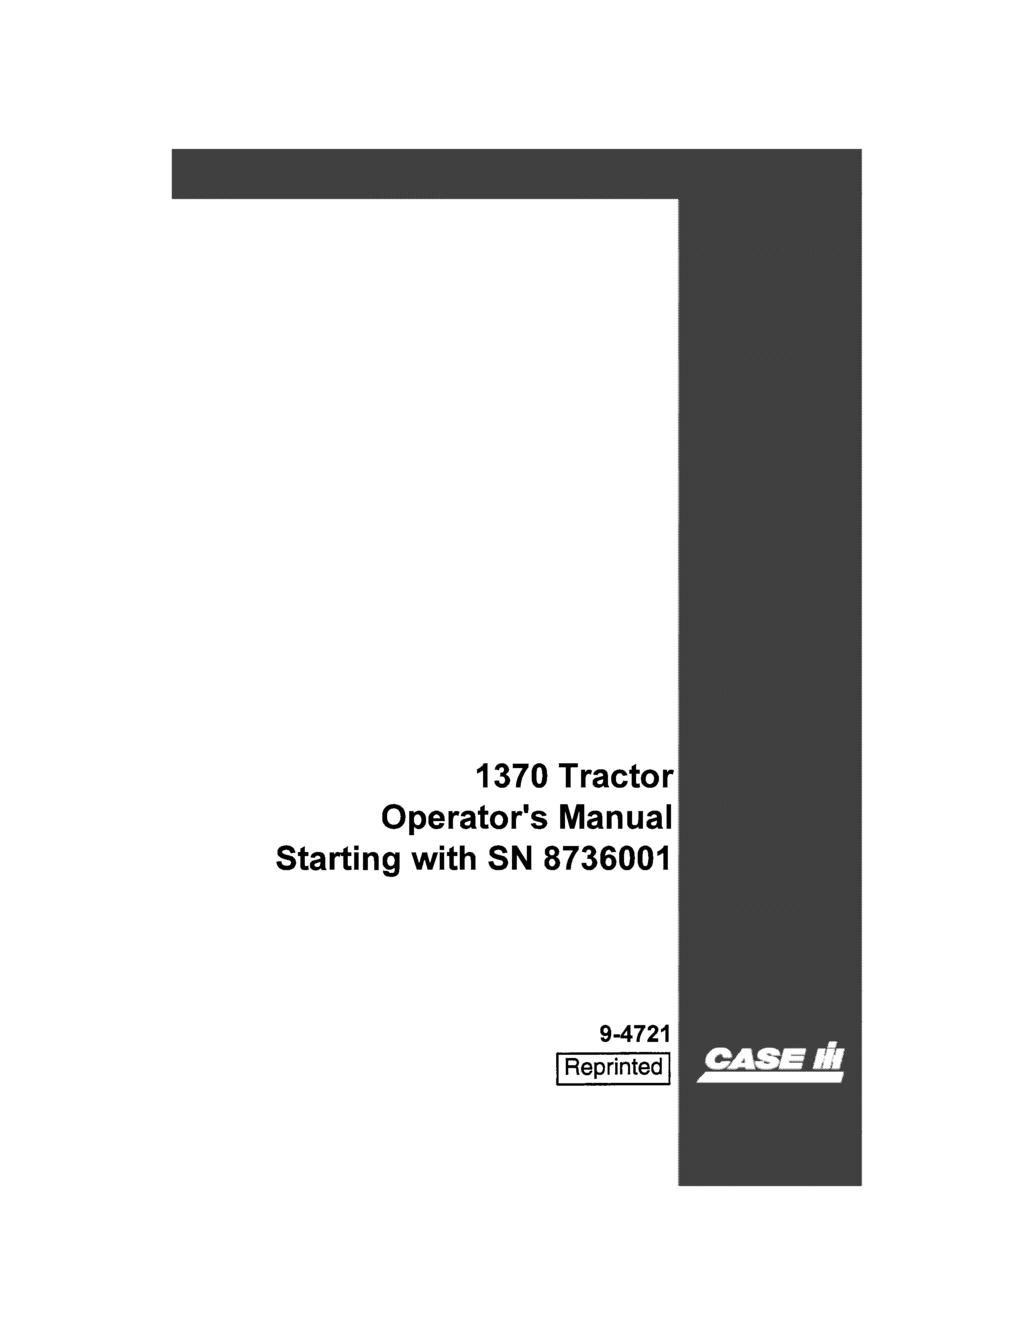 1370 Tractor Operator's Manual